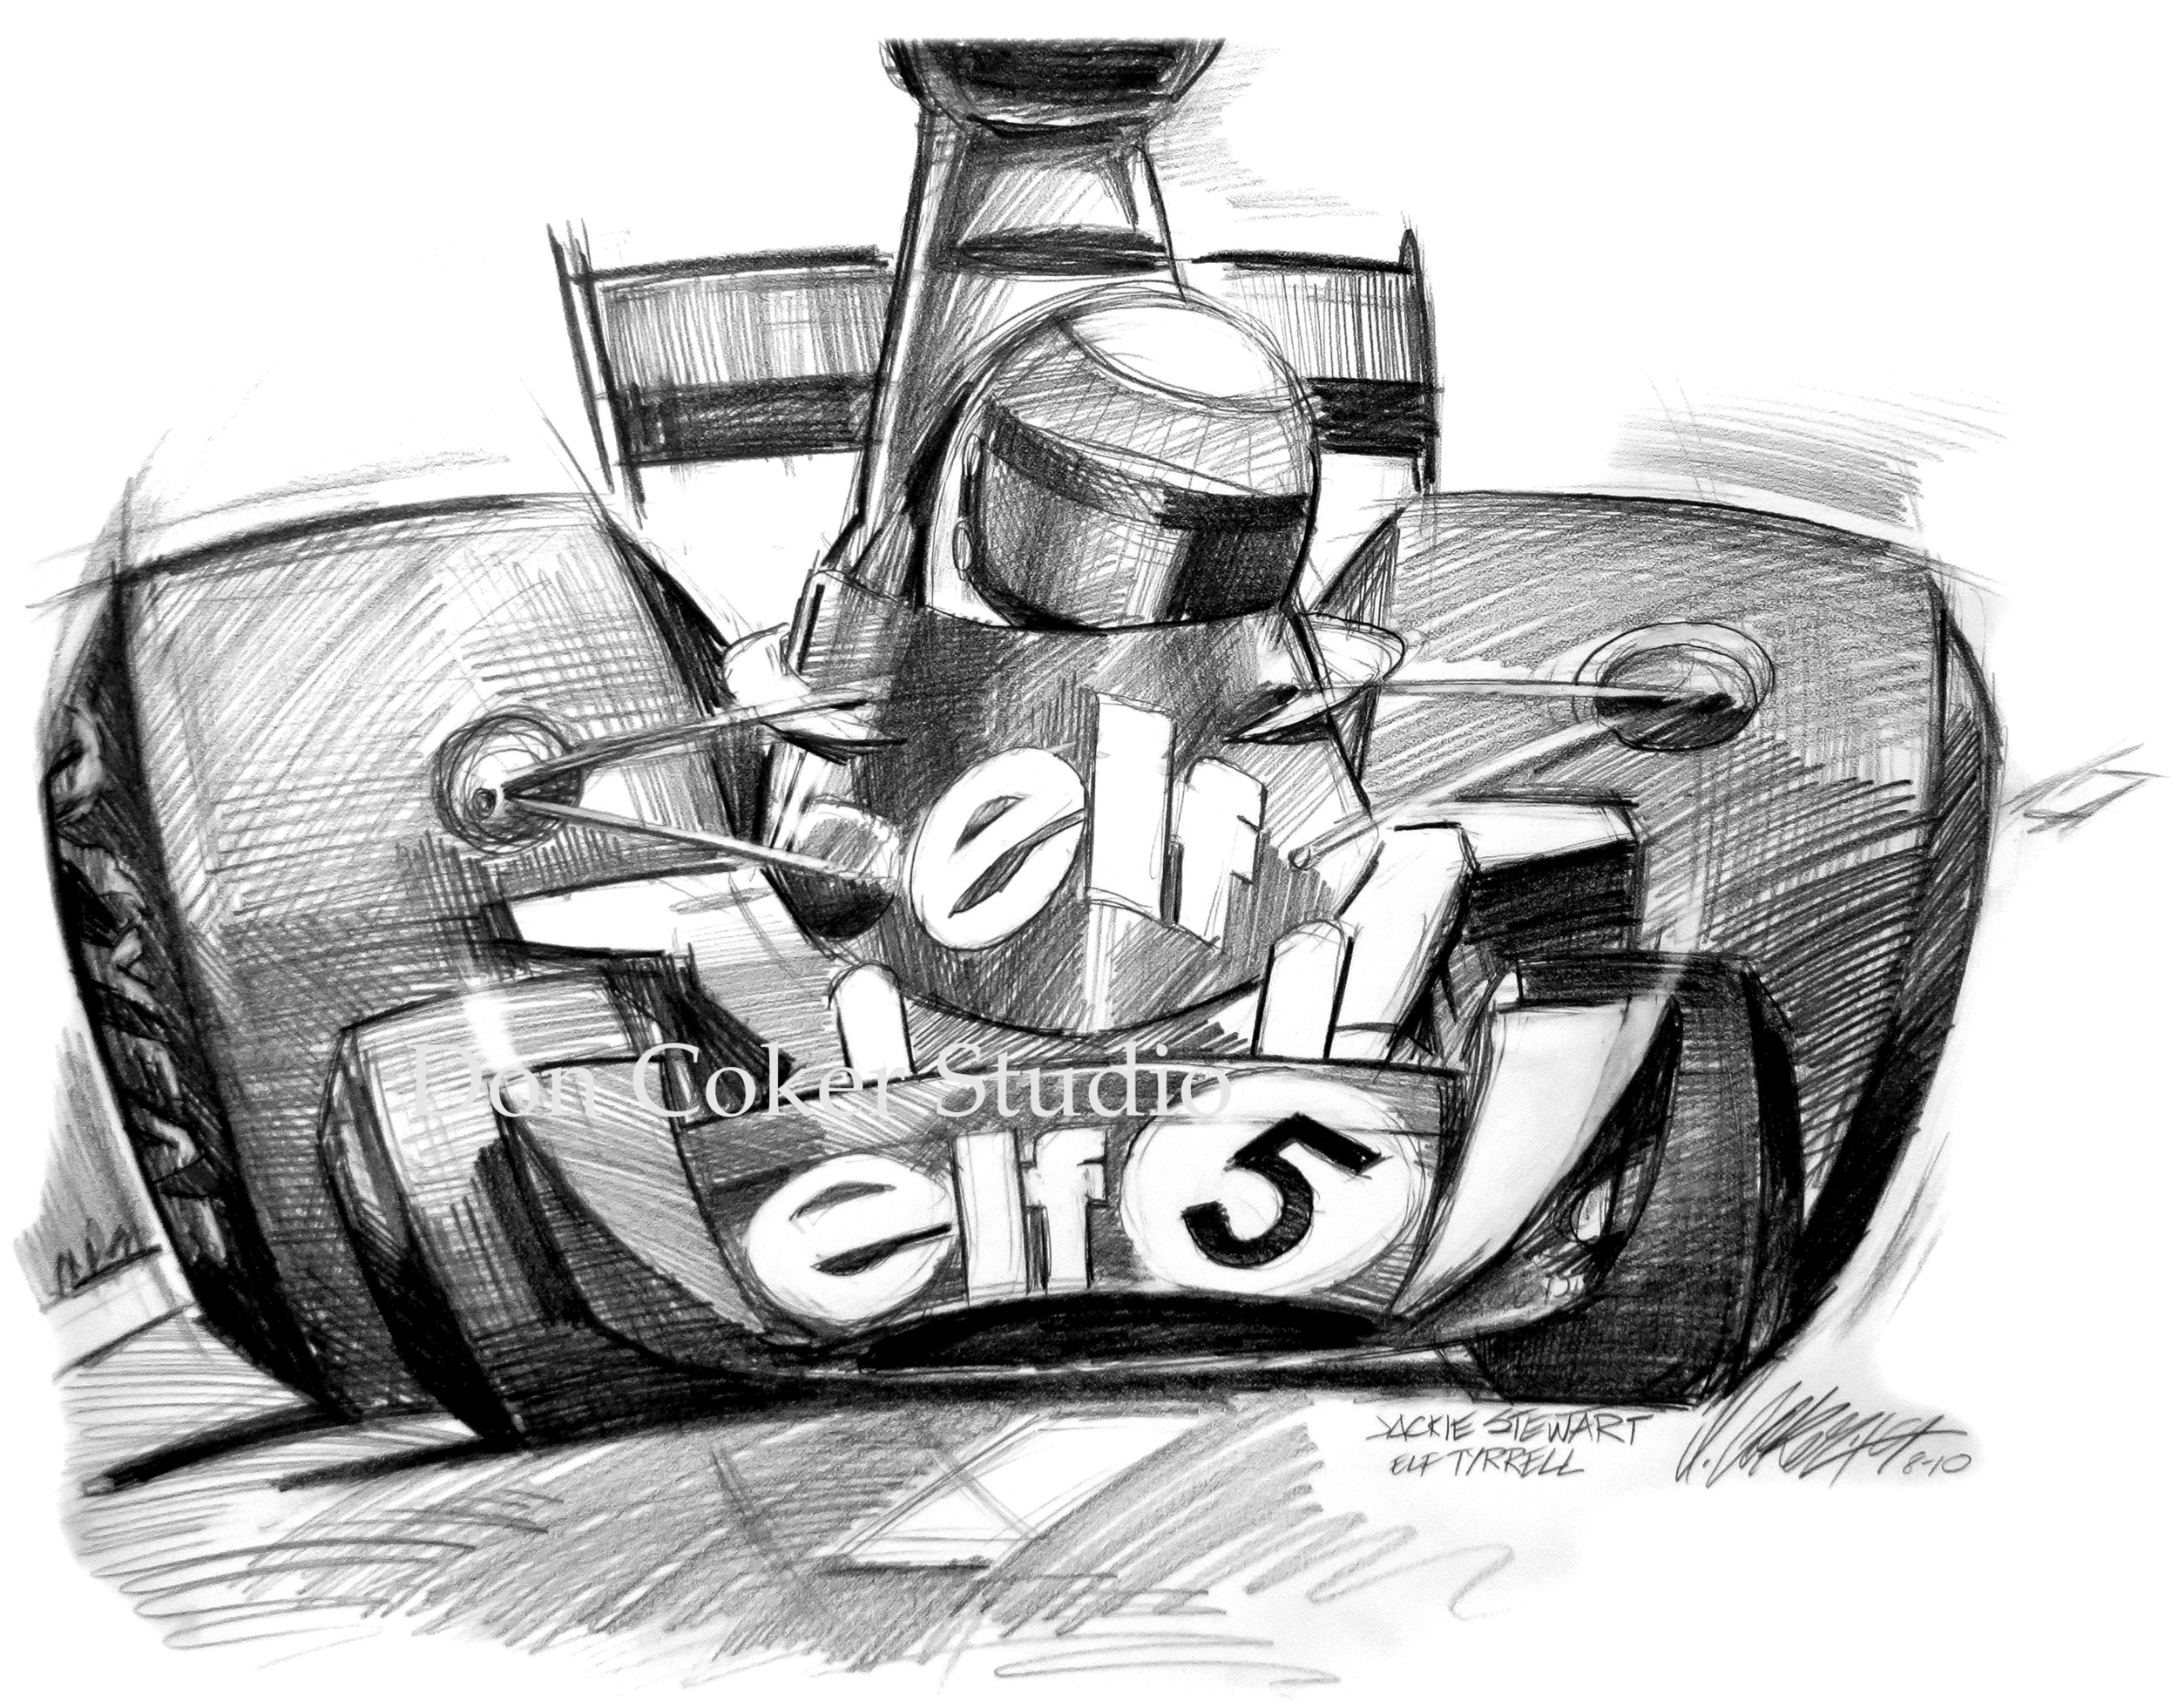 Jackie Stewart enters a turn in an Elf Tyrrell